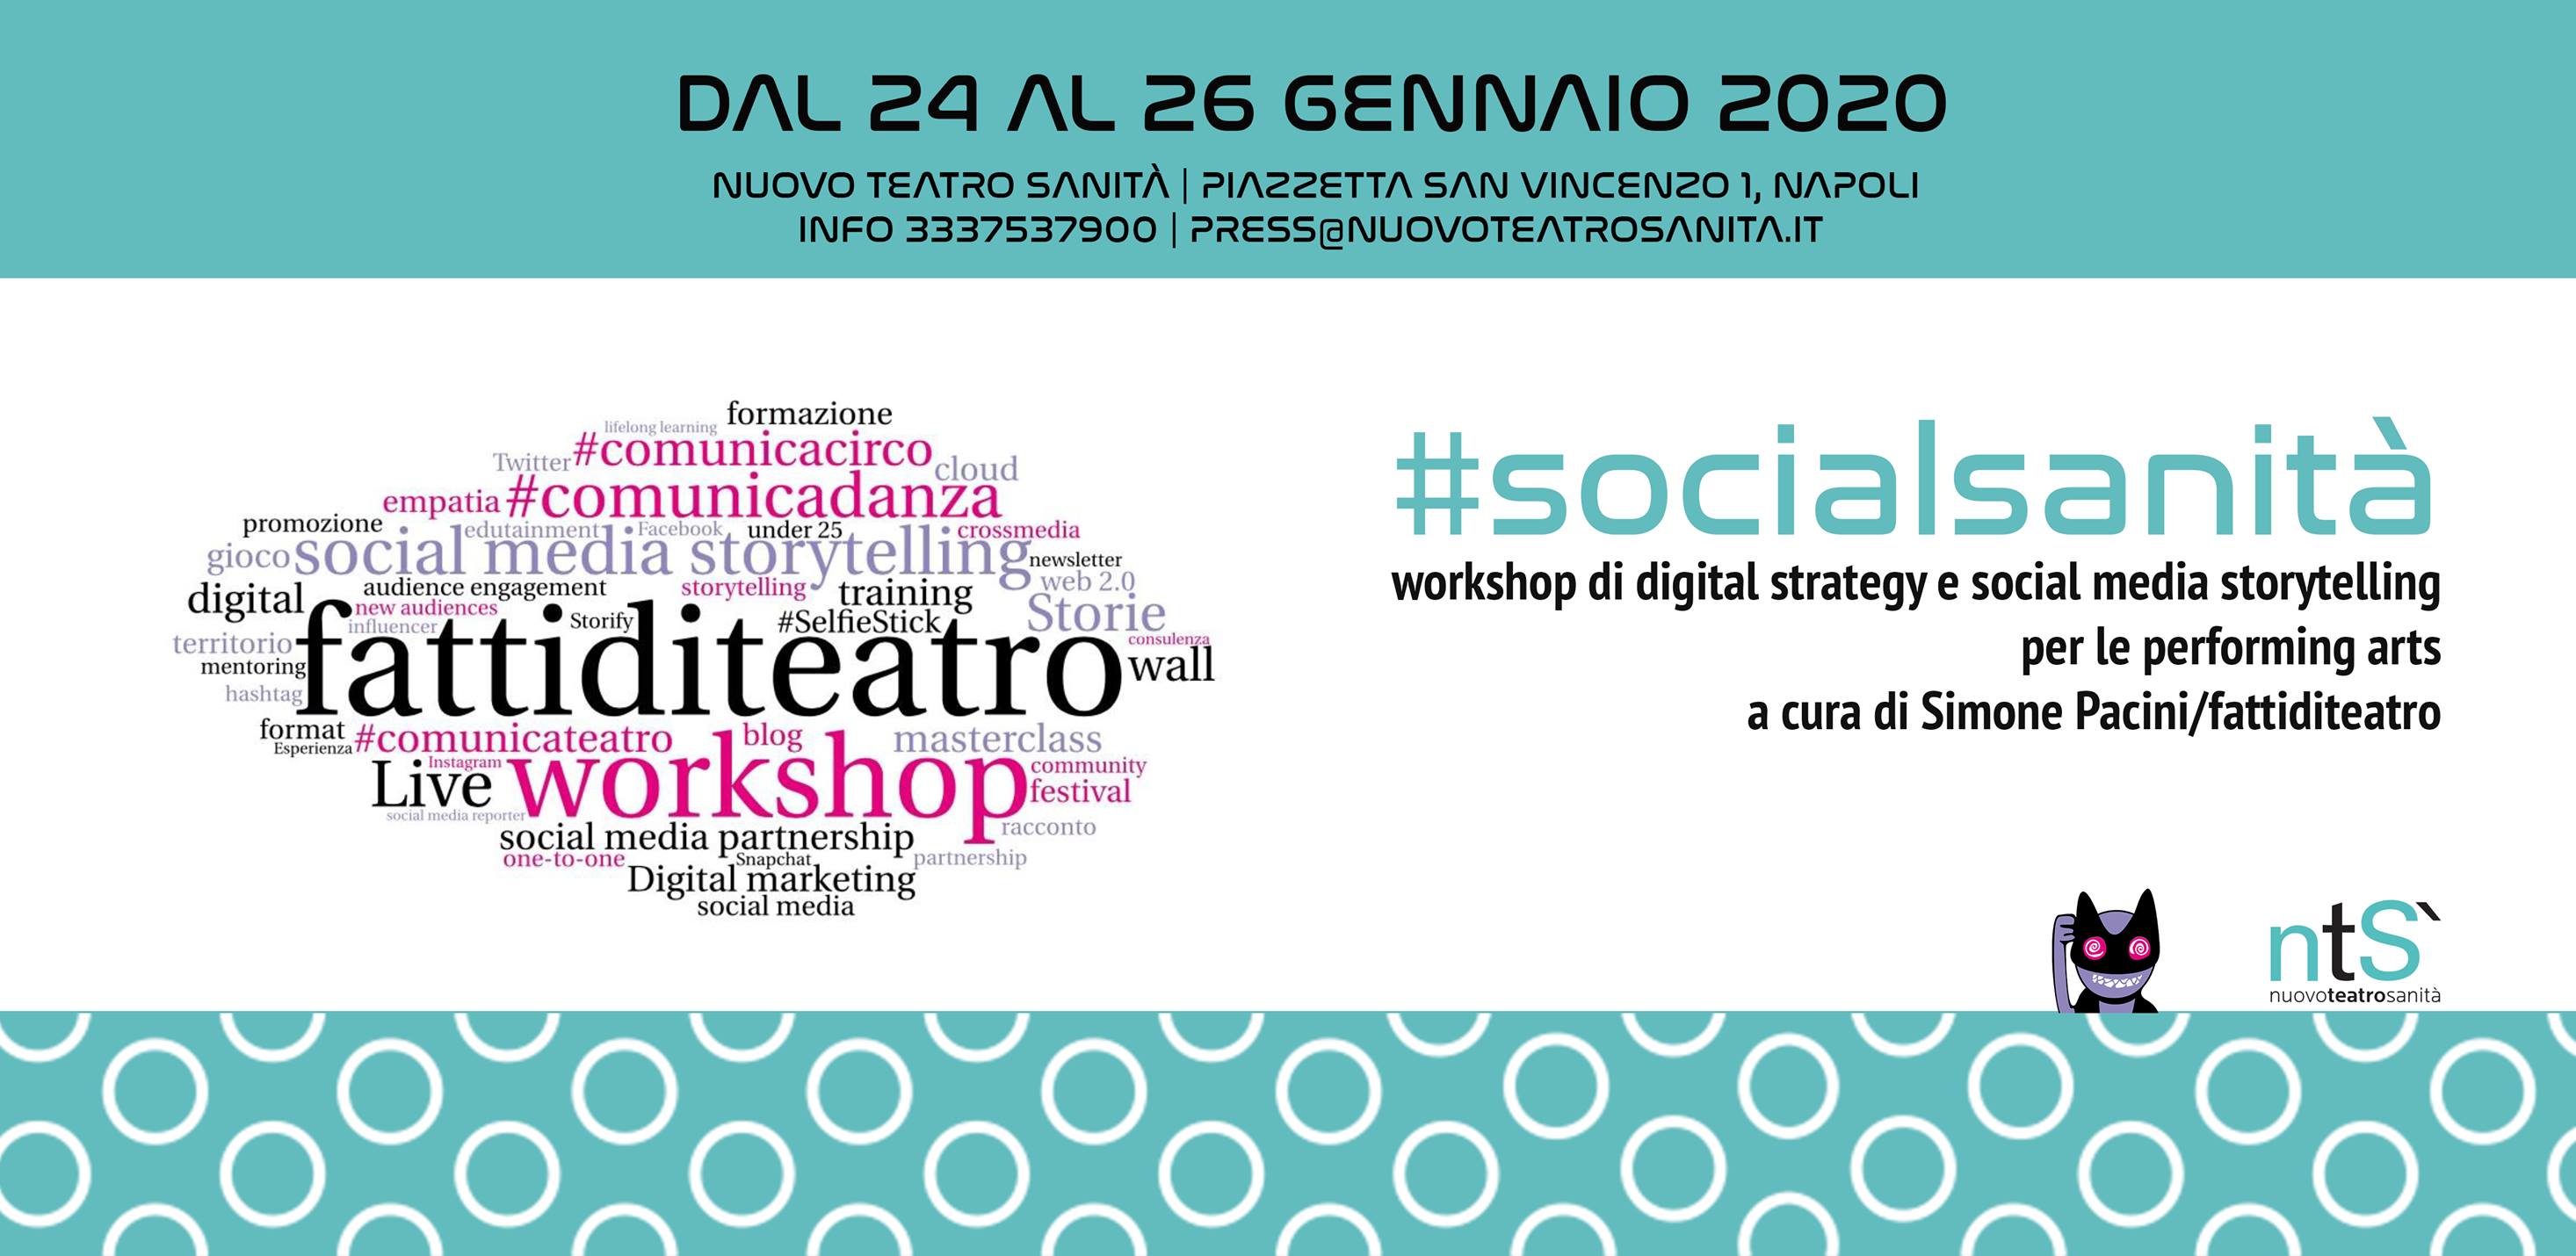 #SocialSanità workshop di digital strategy e social media storytelling